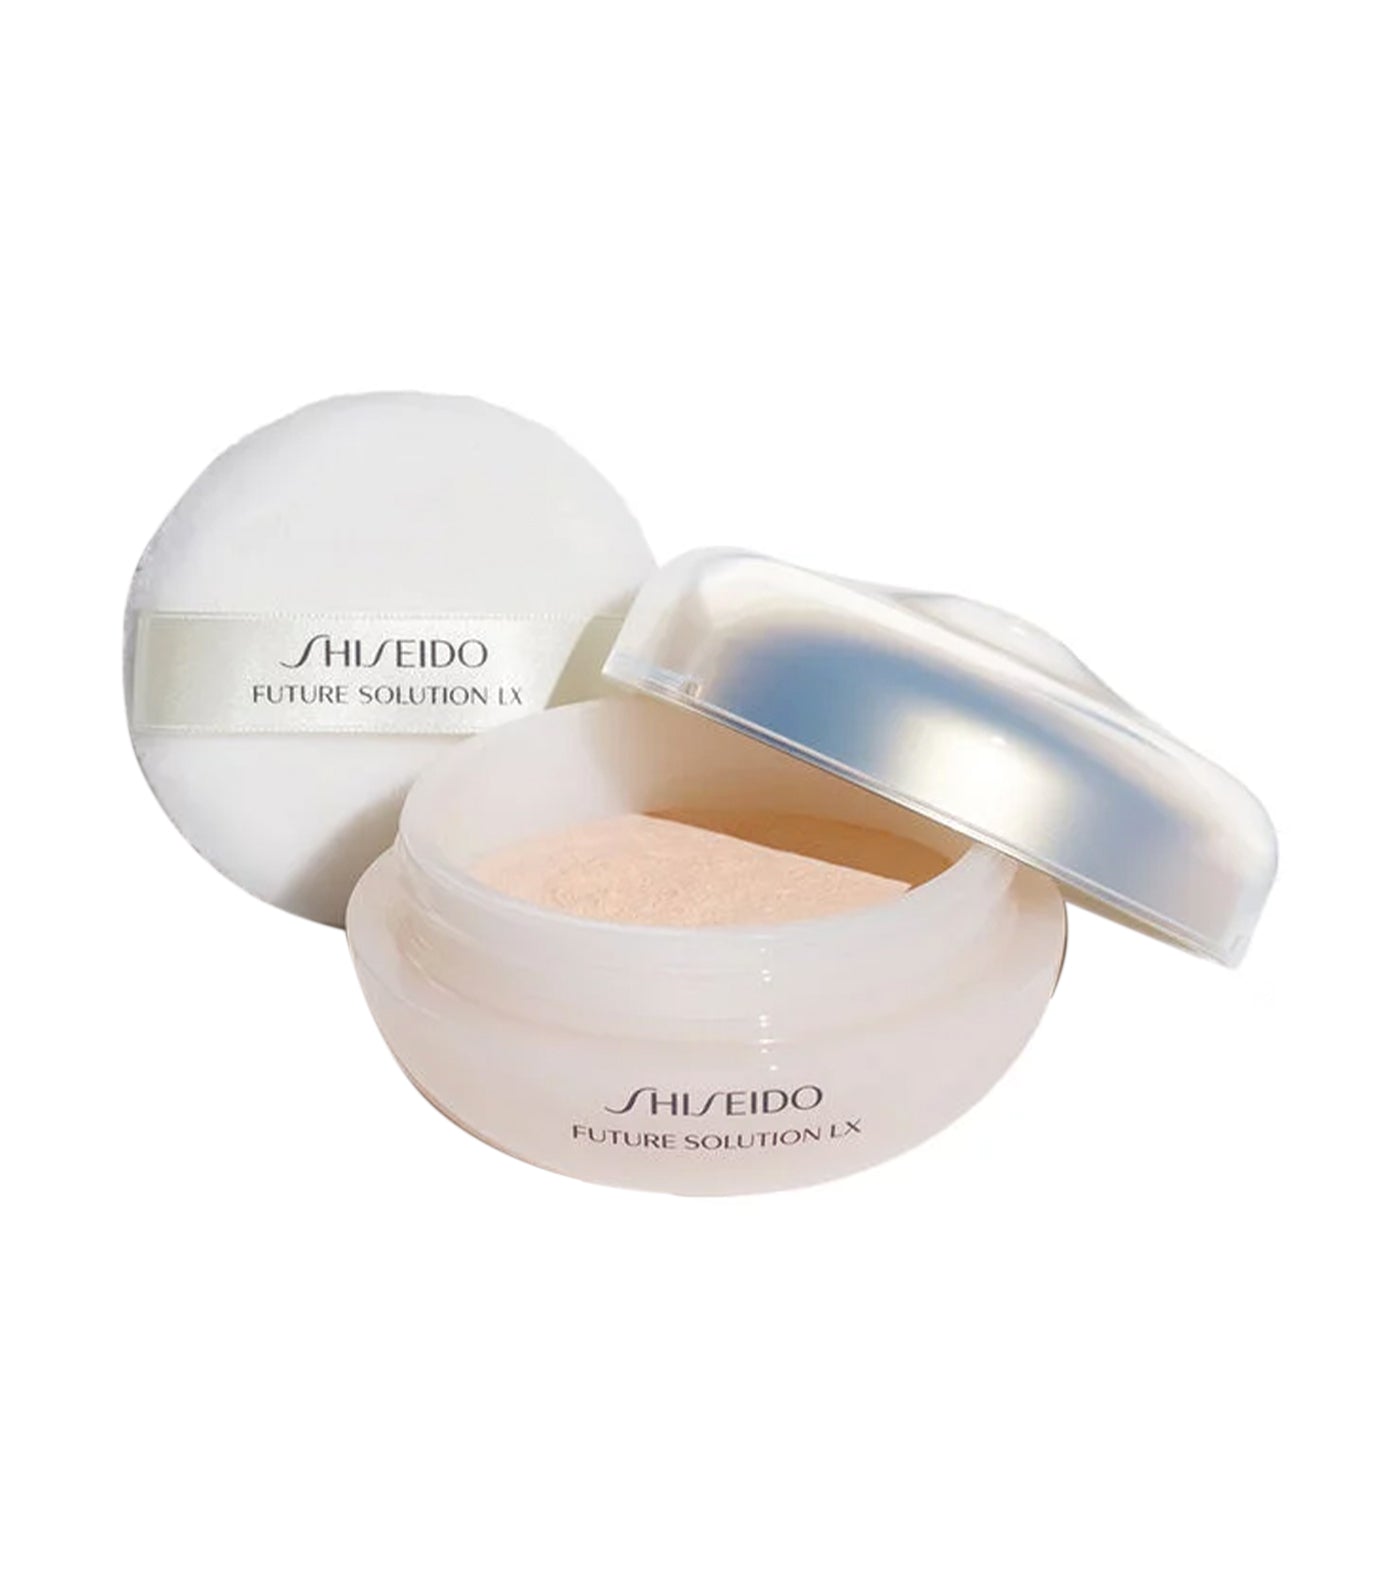 shiseido future solution lx total radiance loose powder